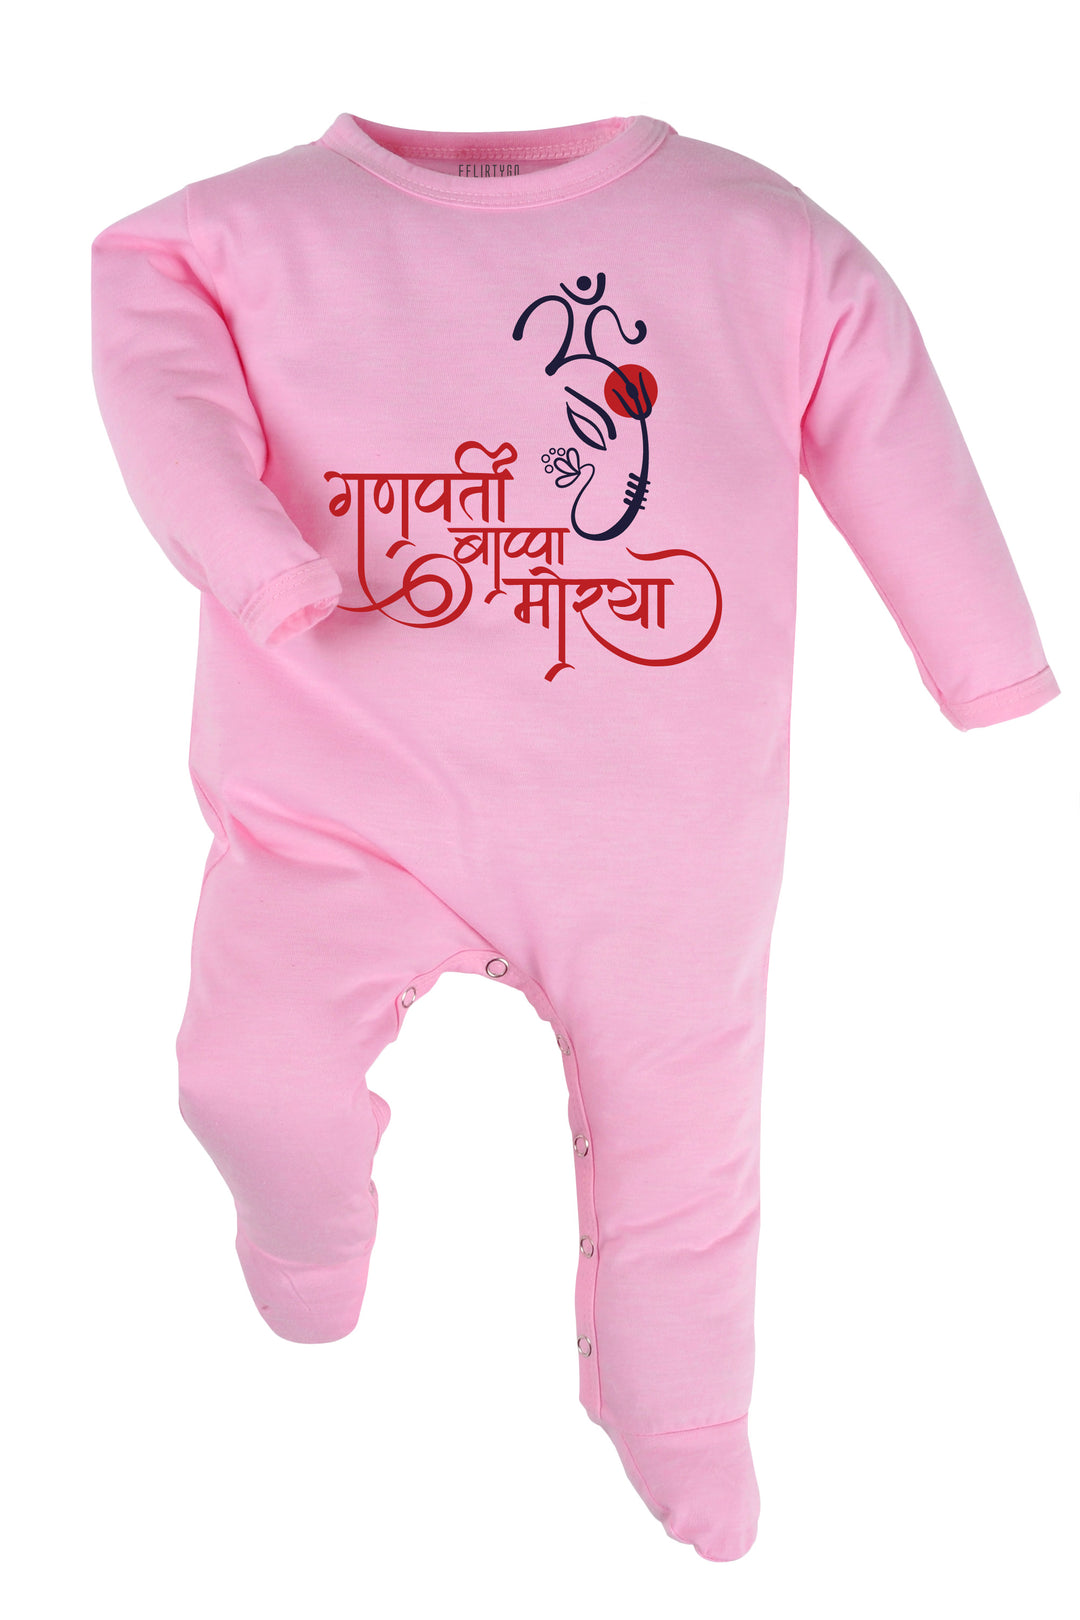 Ganpati Bappa Morya Baby Romper | Onesies